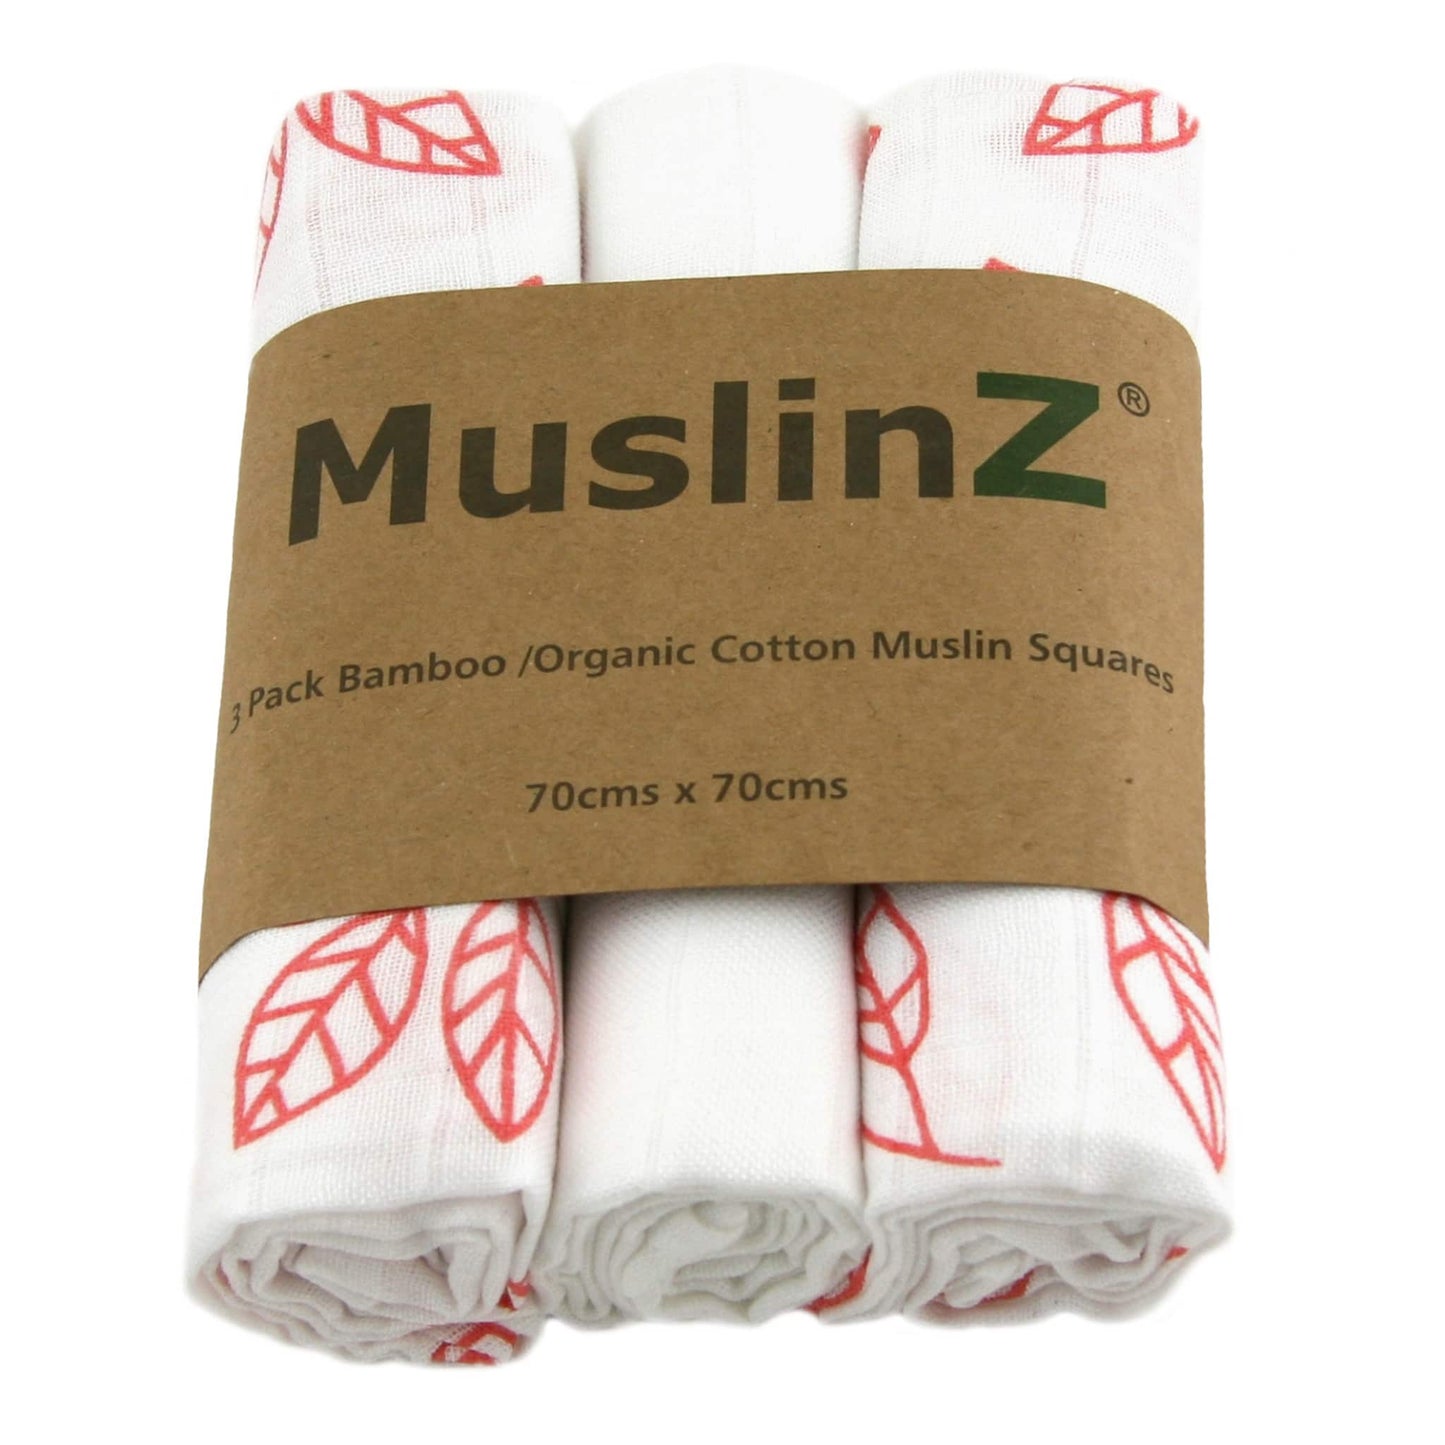 MuslinZ Bamboo/Organic Cotton Muslin Square Coral Leaf